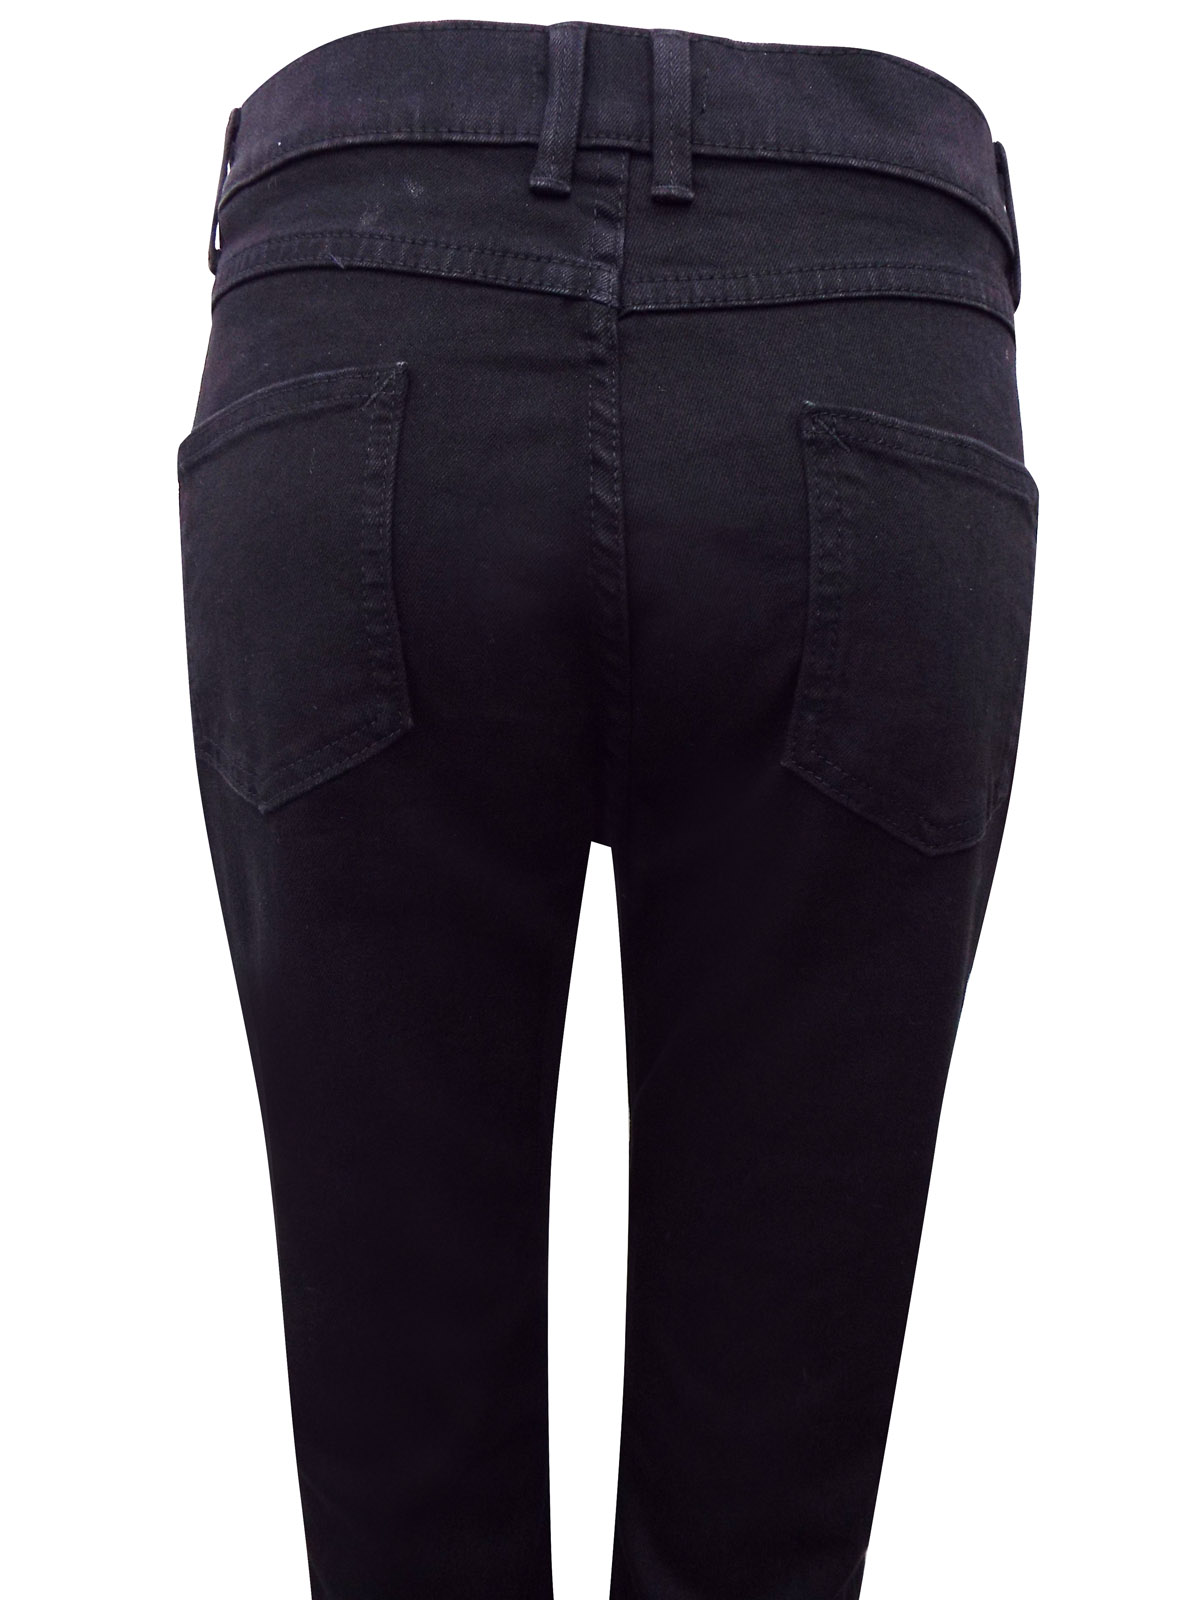 Marks and Spencer - - M&5 BLACK Bootleg Washed Look Denim Jeans - Size 10